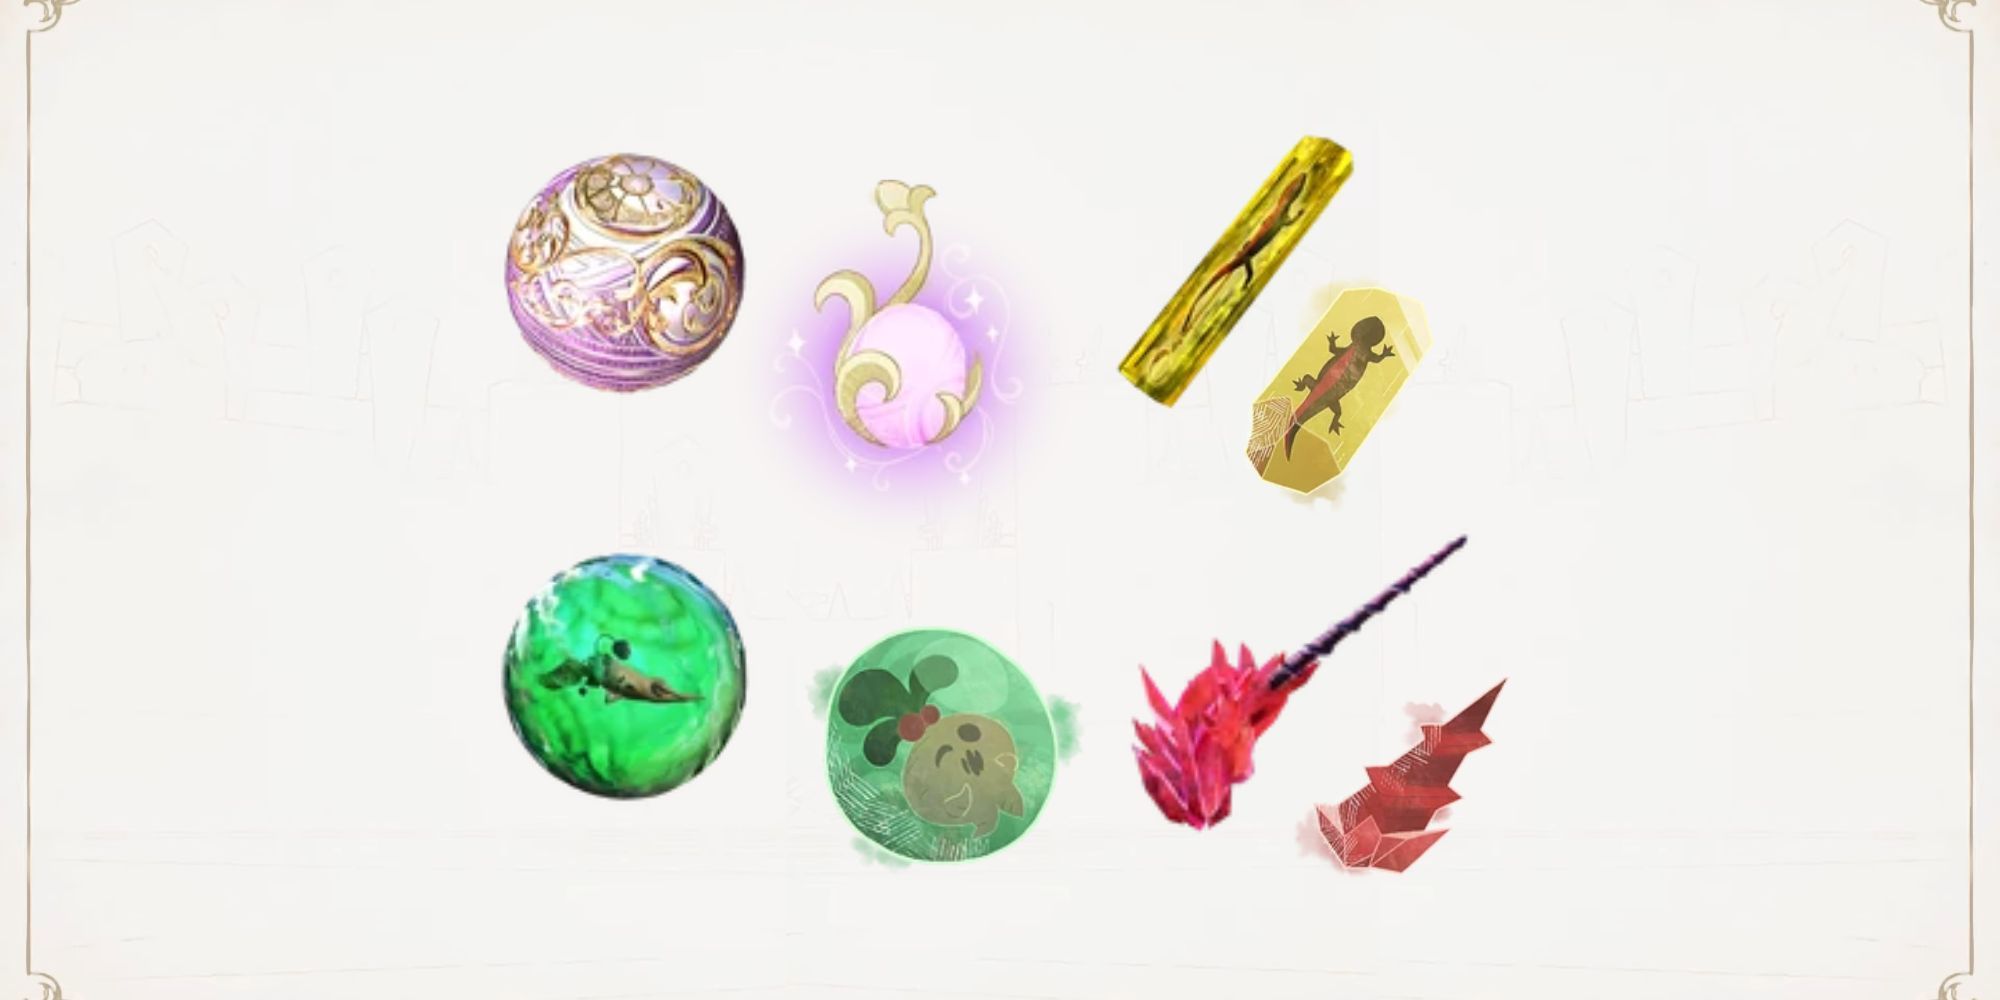 Items from Bayonetta and Bayonetta Origins featuring Moon Pearls, Mandragora Roots, Baked Geckos, and Unicorn Horns